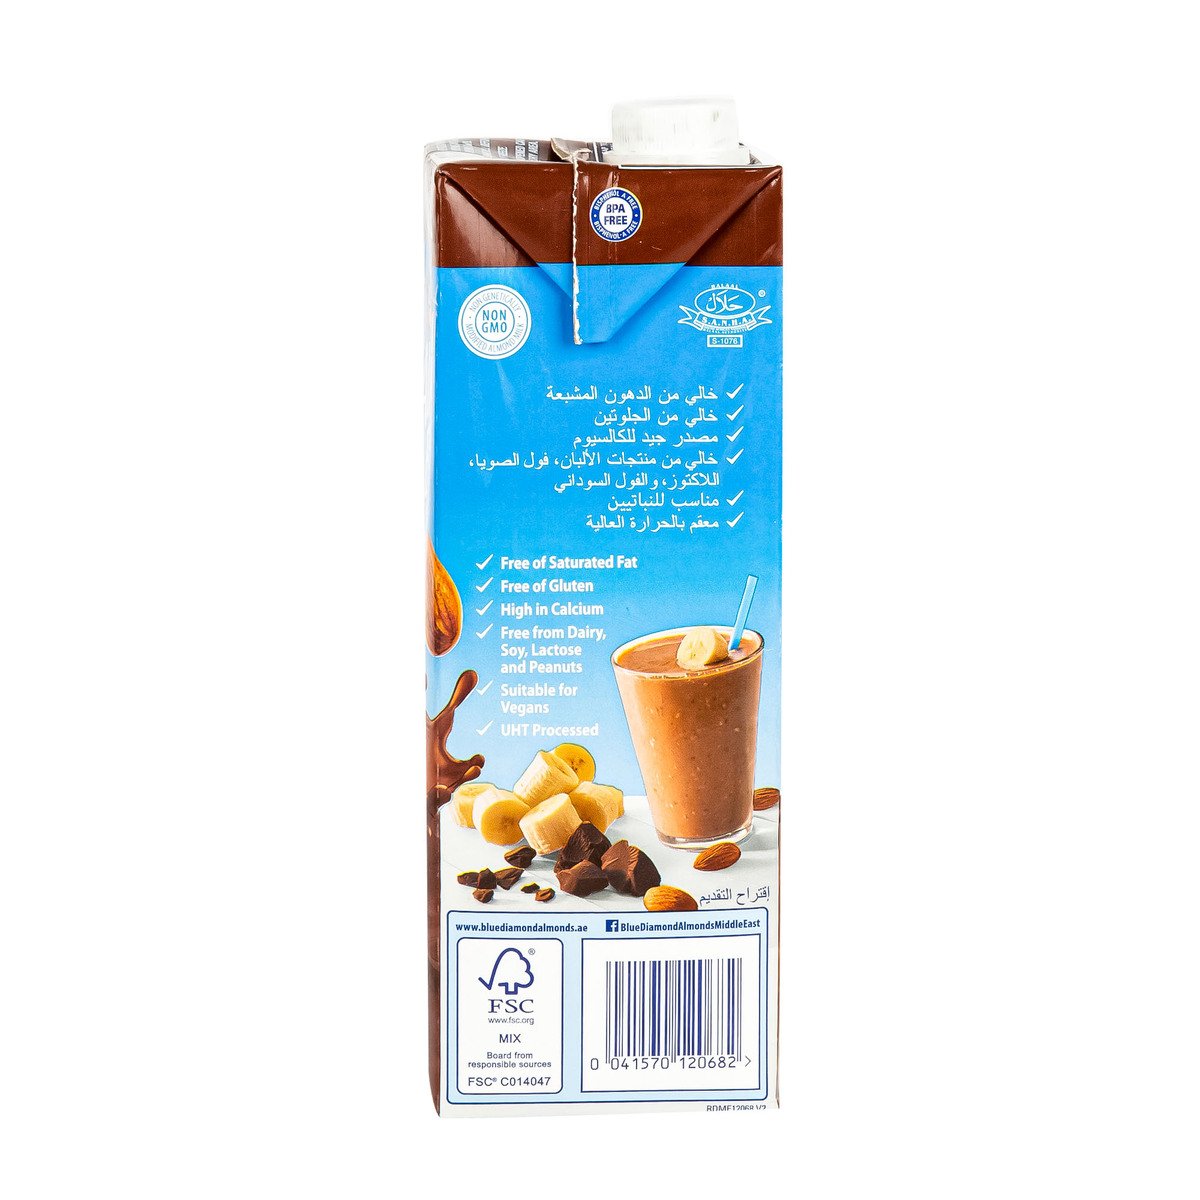 Blue Diamond Chocolate Almond Milk 1 Litre